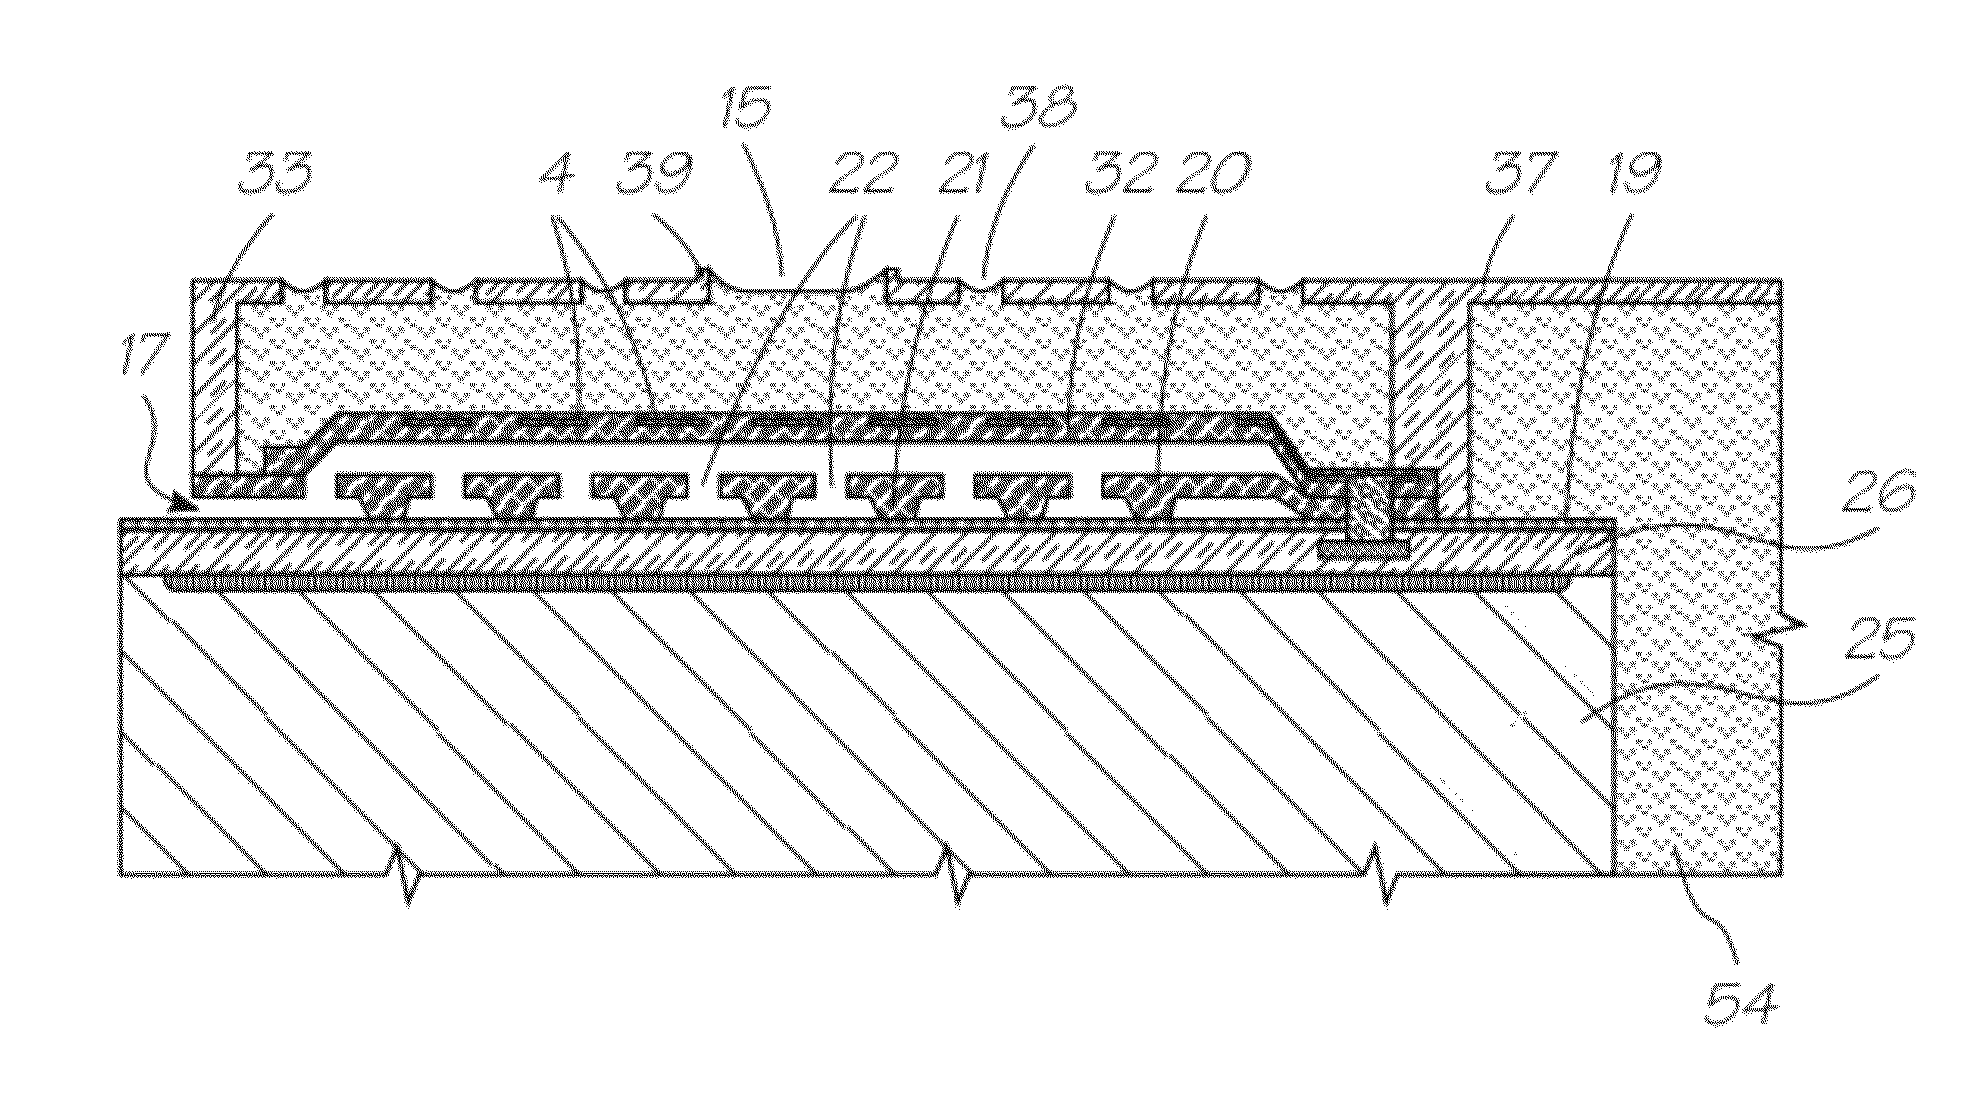 Printhead integrated circuit with actuators proximate exterior surface